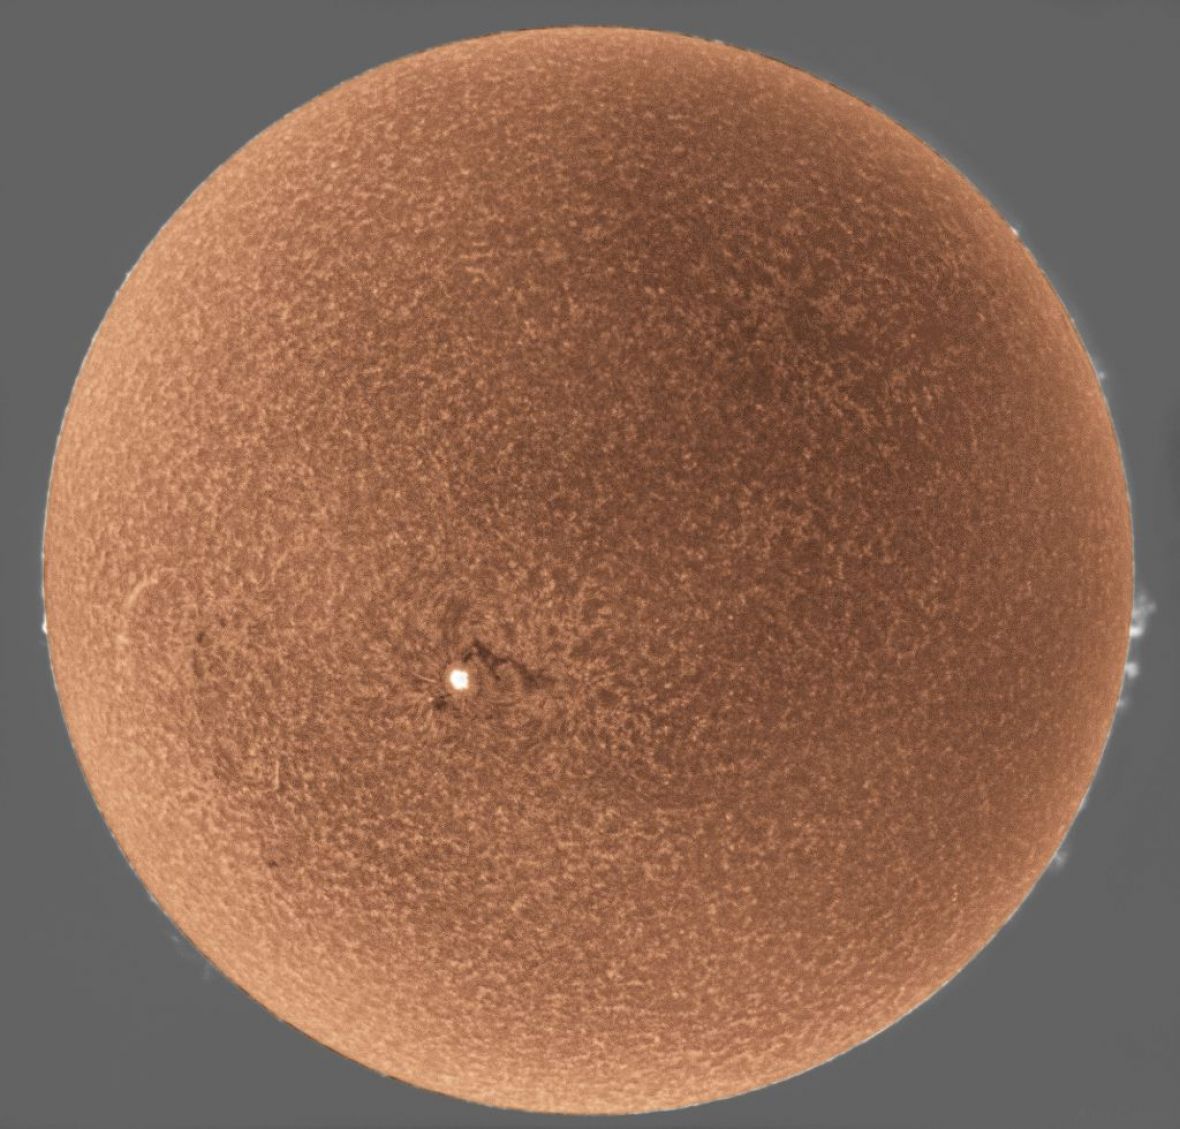 Foto: Alan Ćatović/ Sunce – snimak je napravljen pomoću solarnog teleskopa Lunt LS60, aparatom Canon 650D, uz barlow 2x